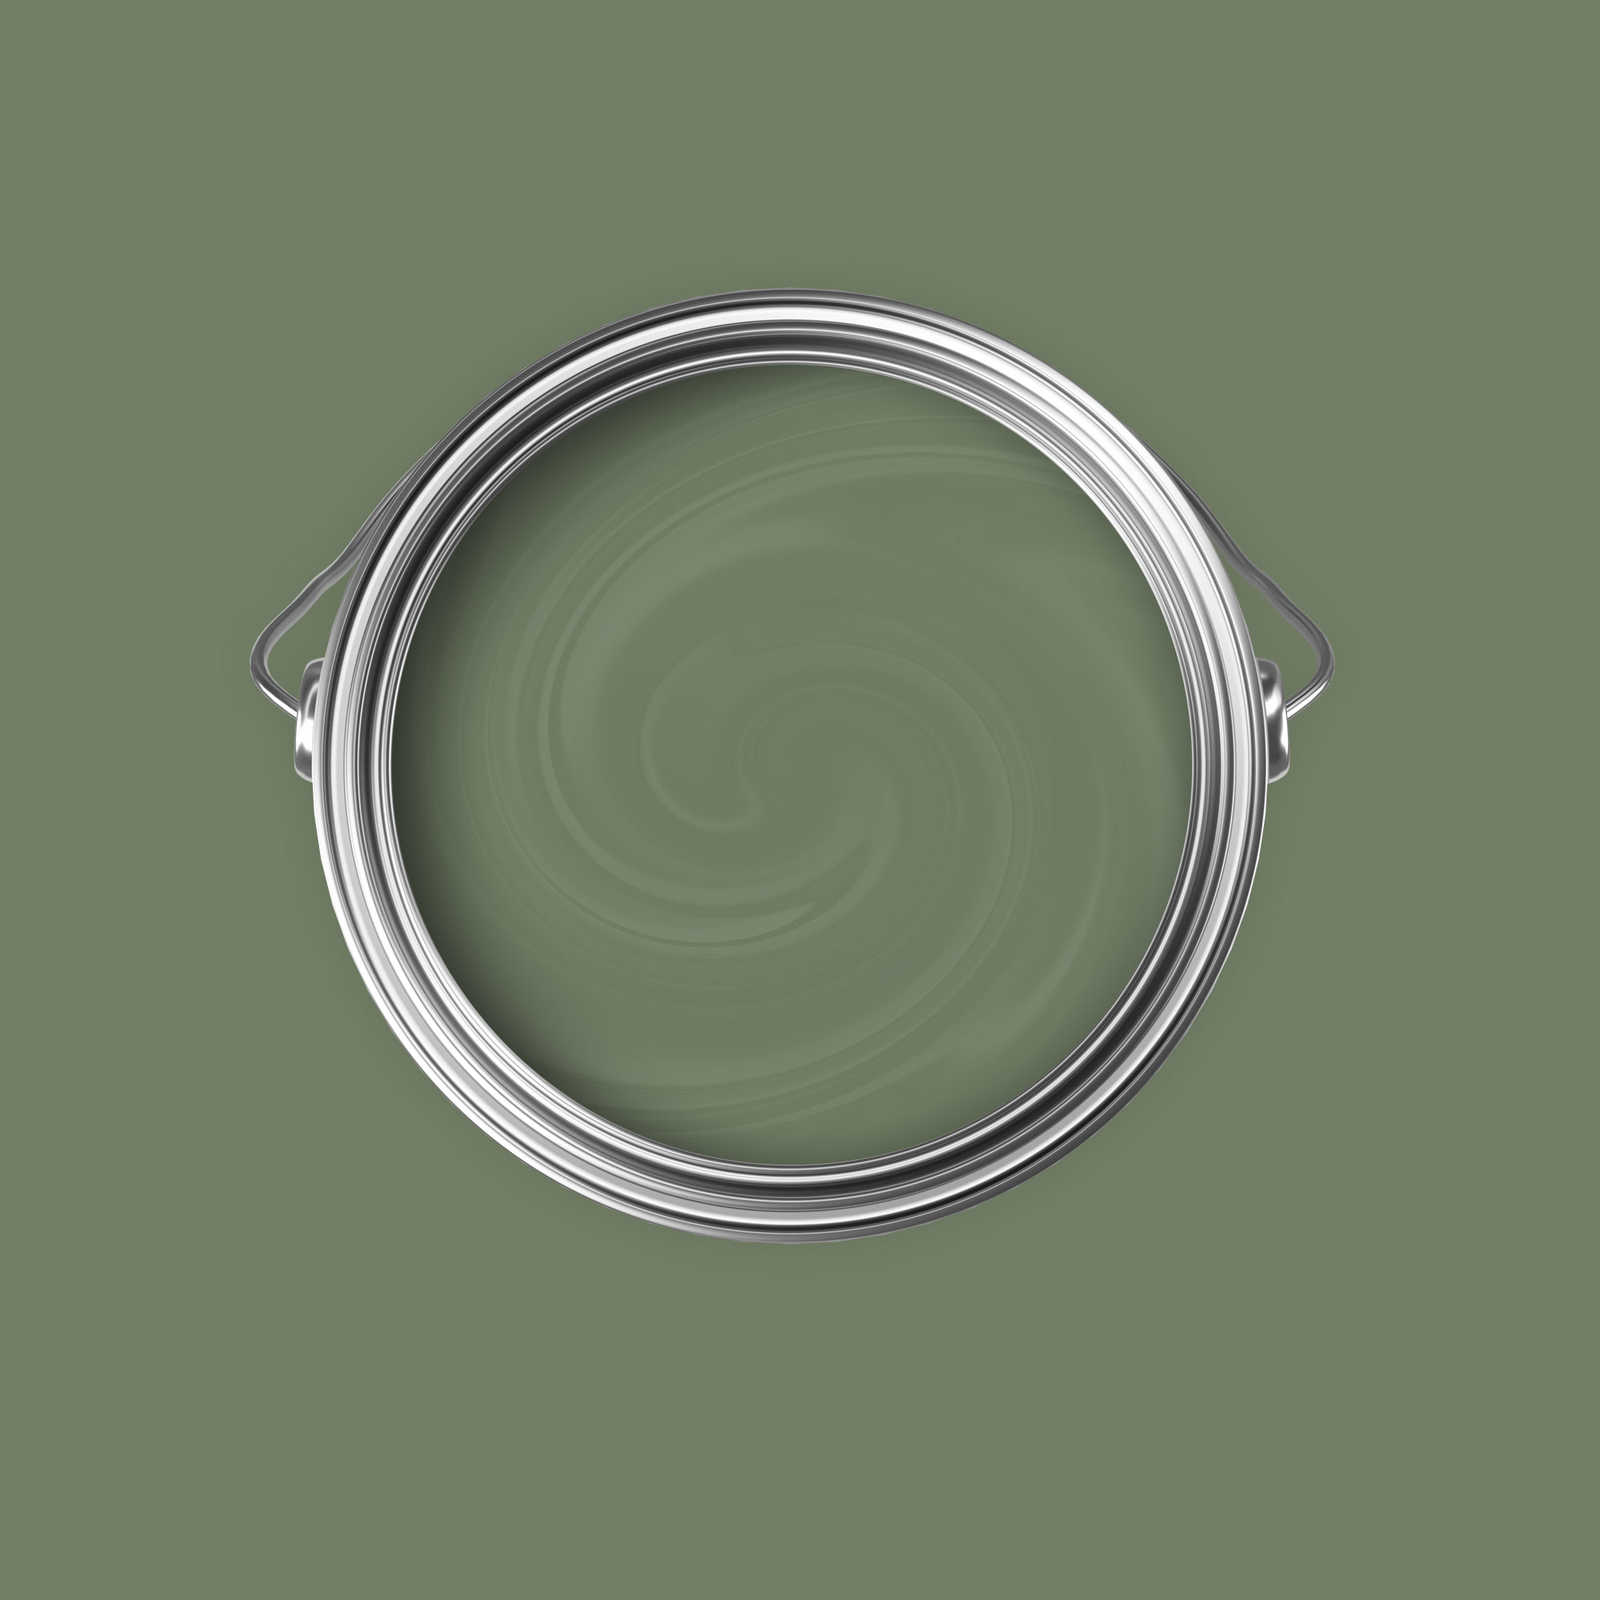             Pintura mural Premium relajante verde oliva »Gorgeous Green« NW504 – 5 litro
        